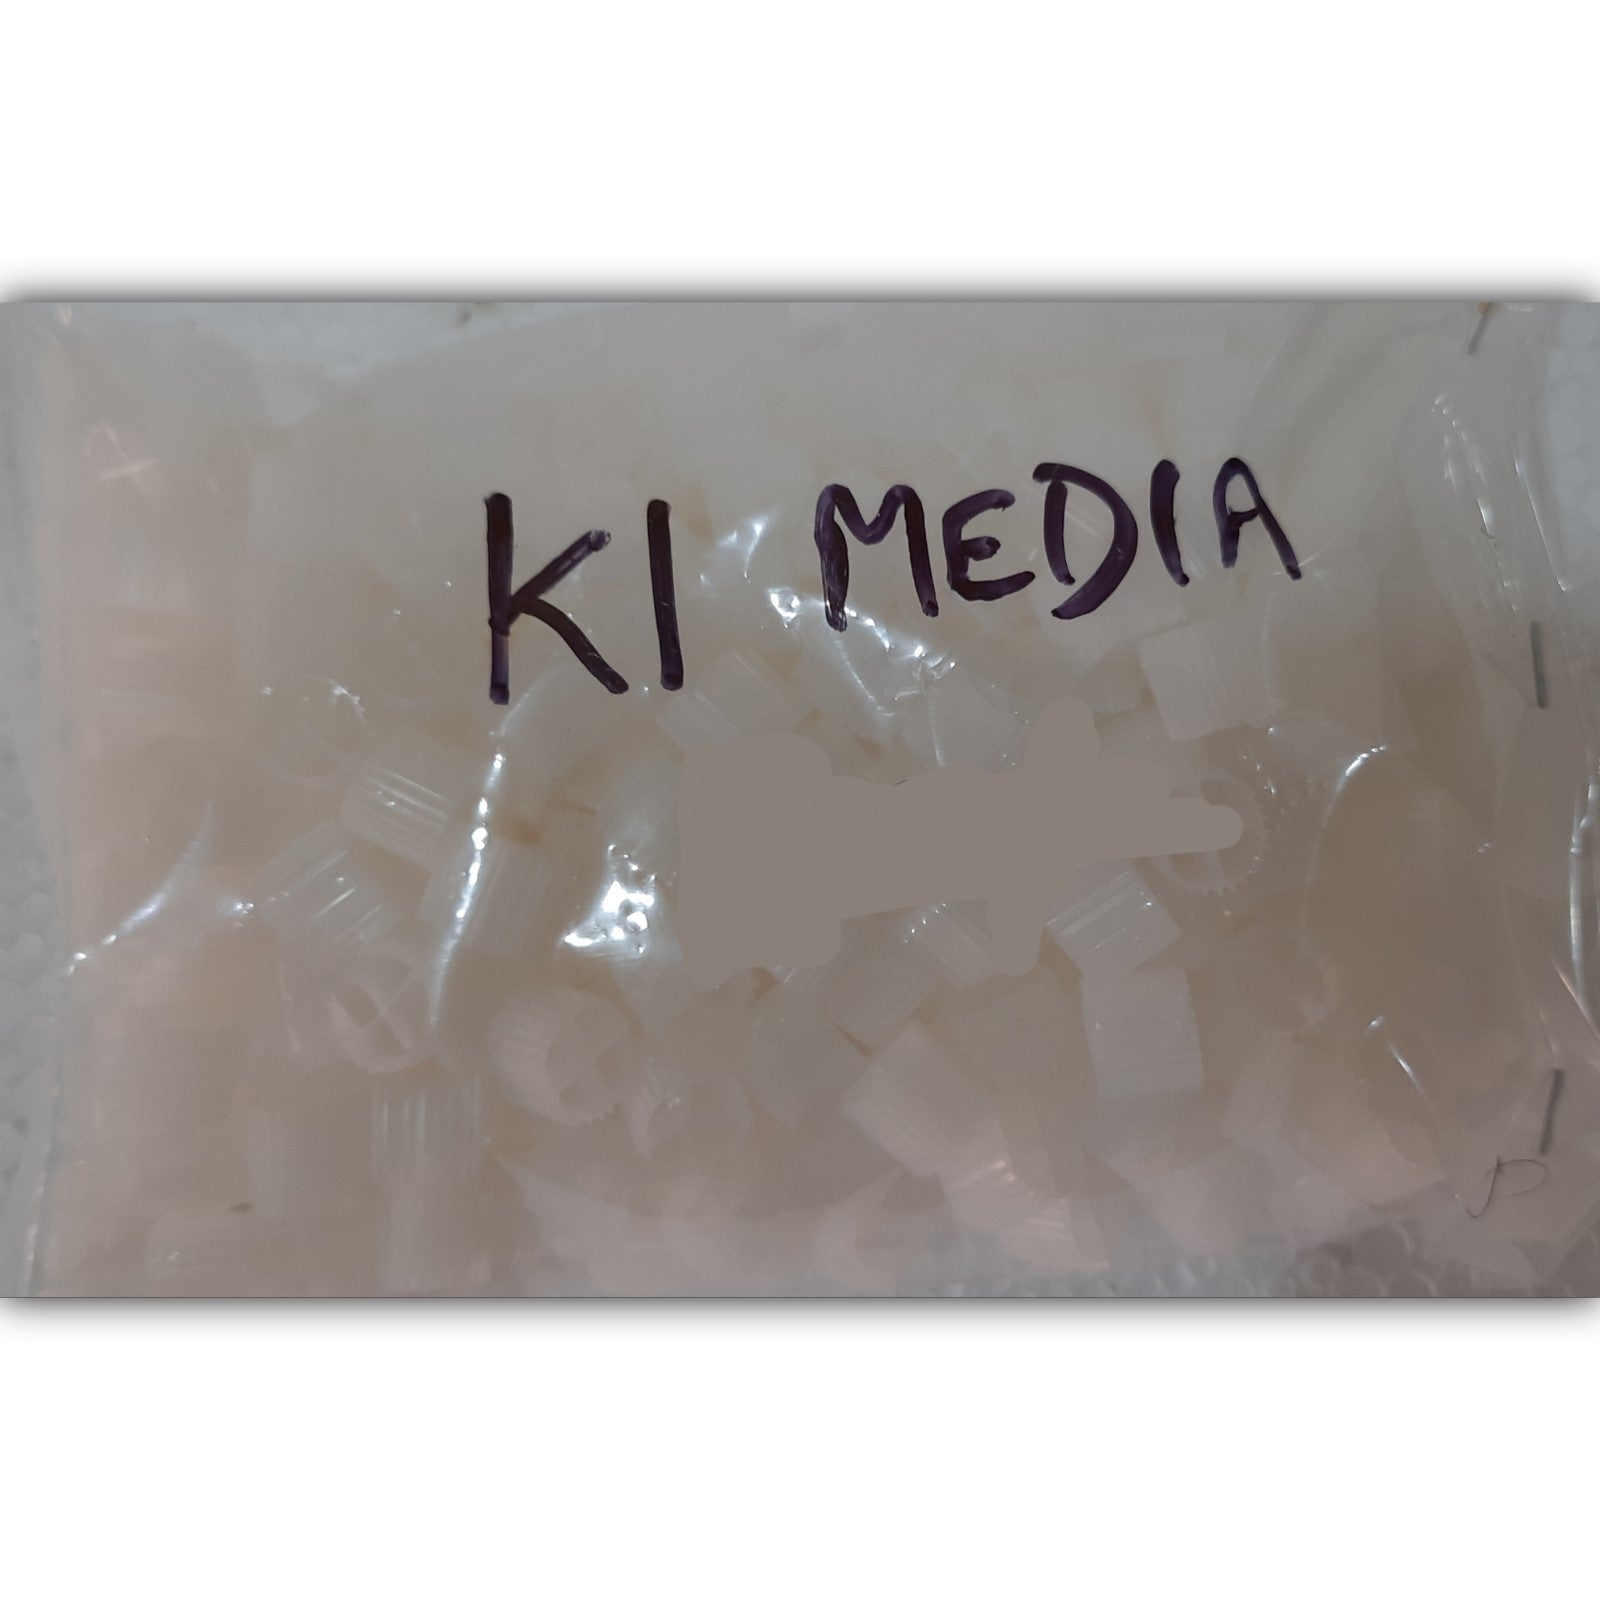 K1 Media 100g Imported